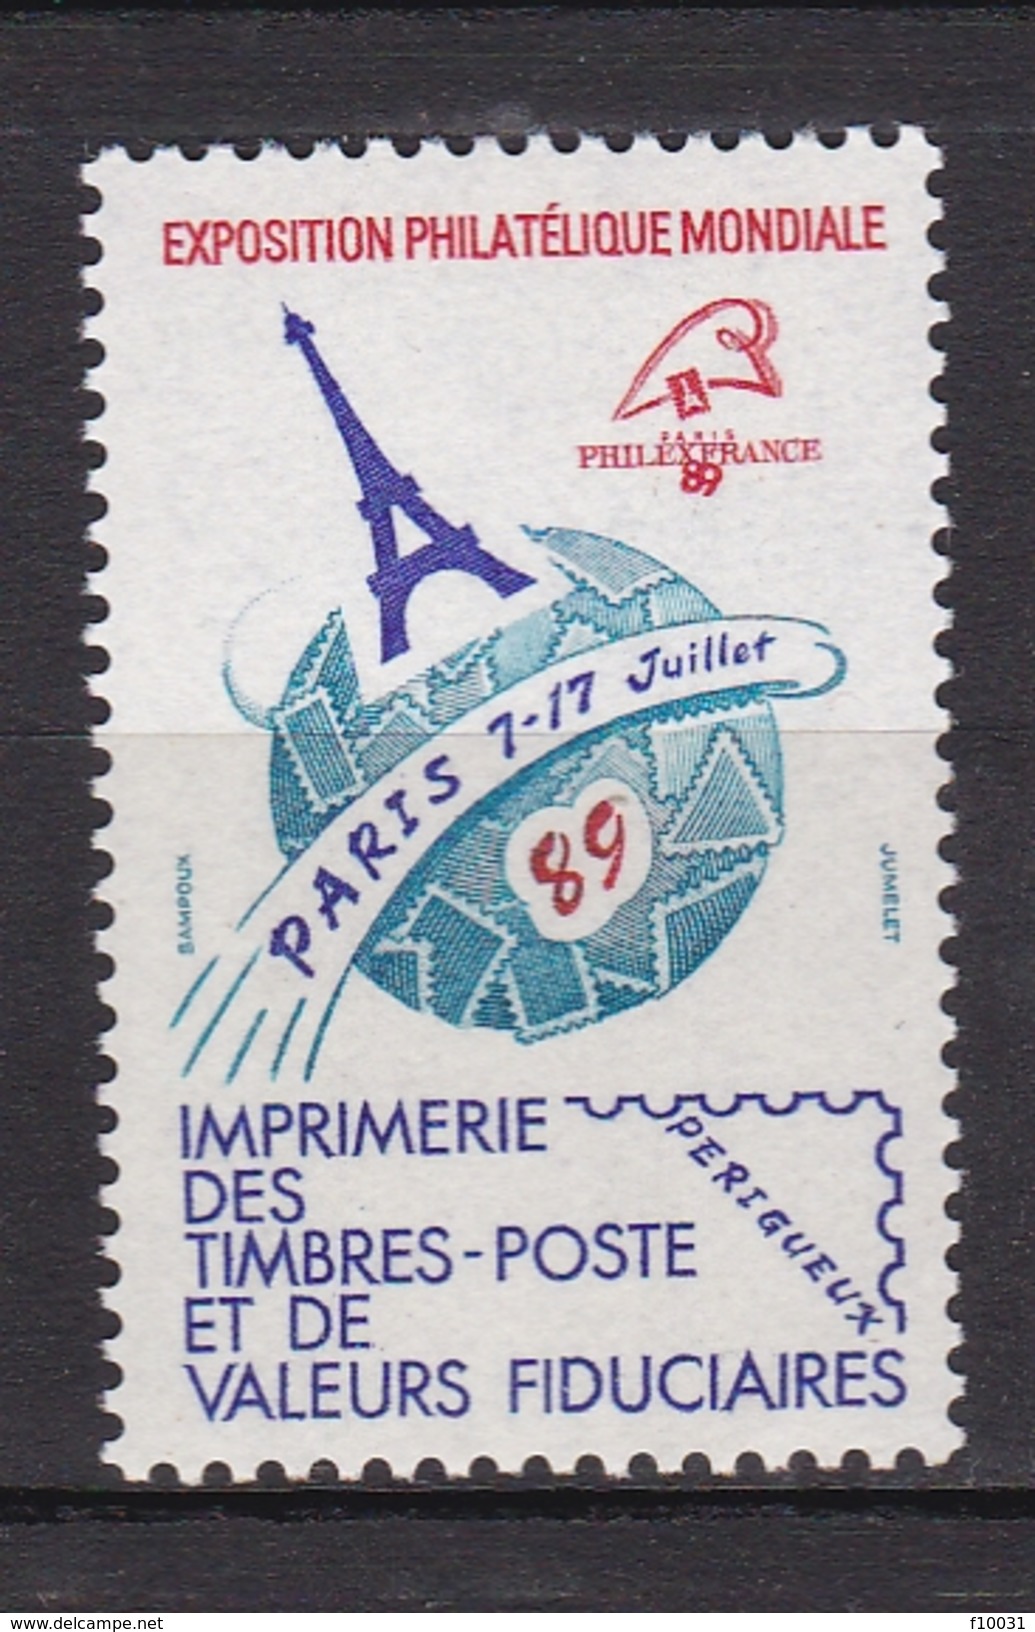 Exposition Philatélique Mondiale Paris 7-17 Juillet 1989 - Esposizioni Filateliche